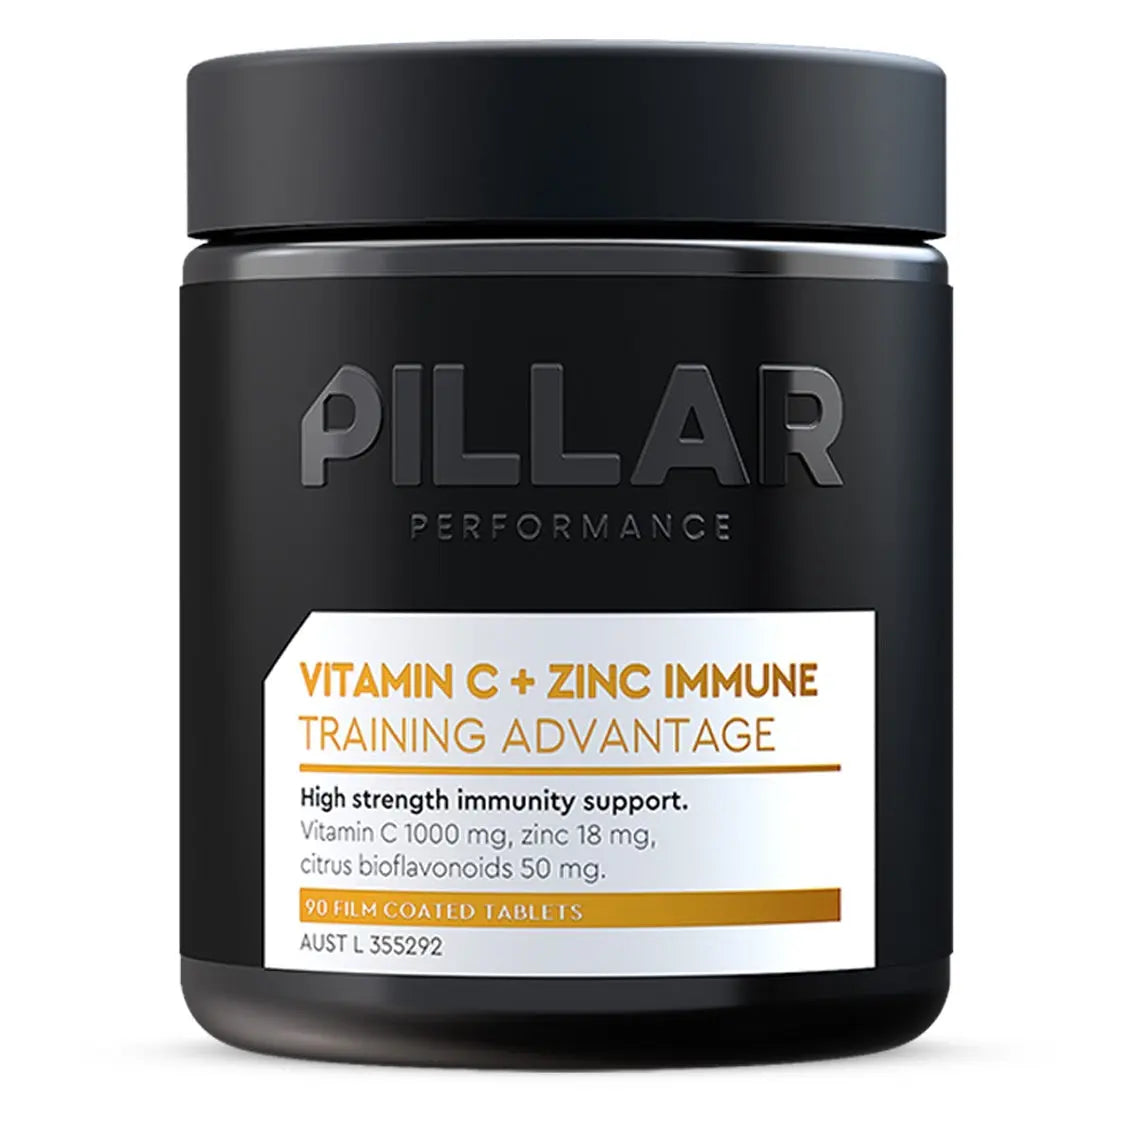 PILLAR Performance Vitamin C + Zinc Immune Tablets